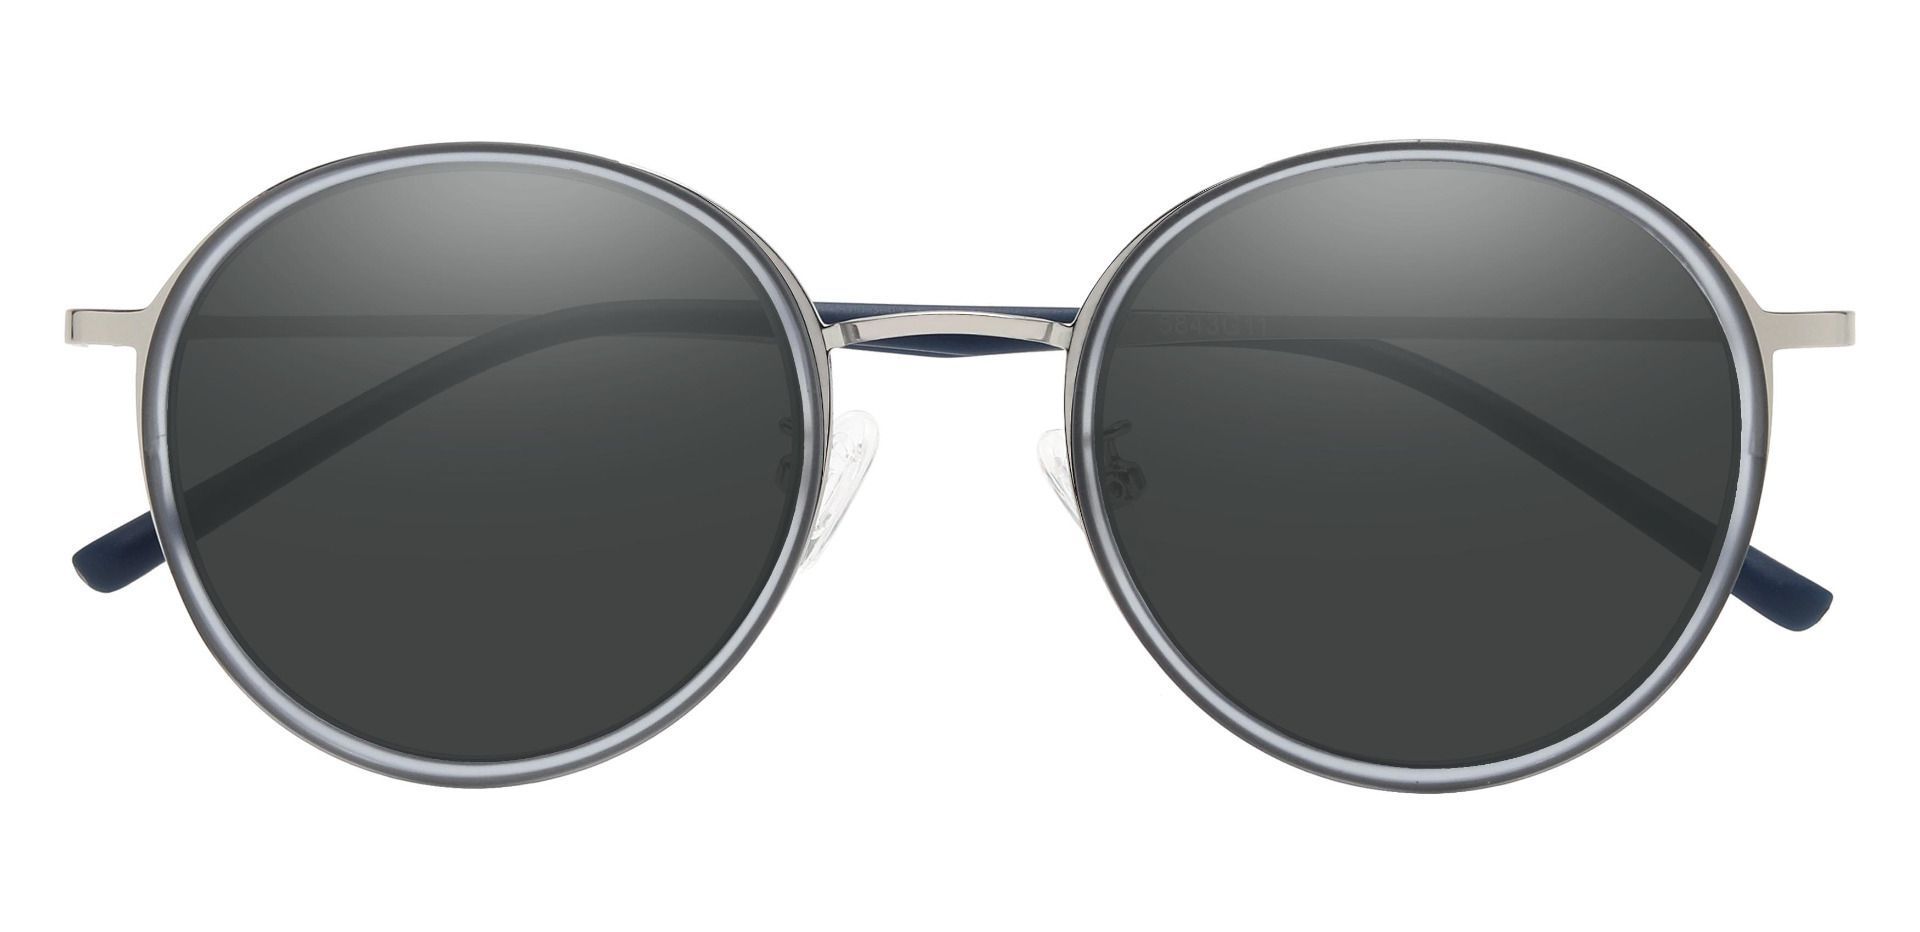 Brunswick Round Reading Sunglasses - Gray Frame With Gray Lenses